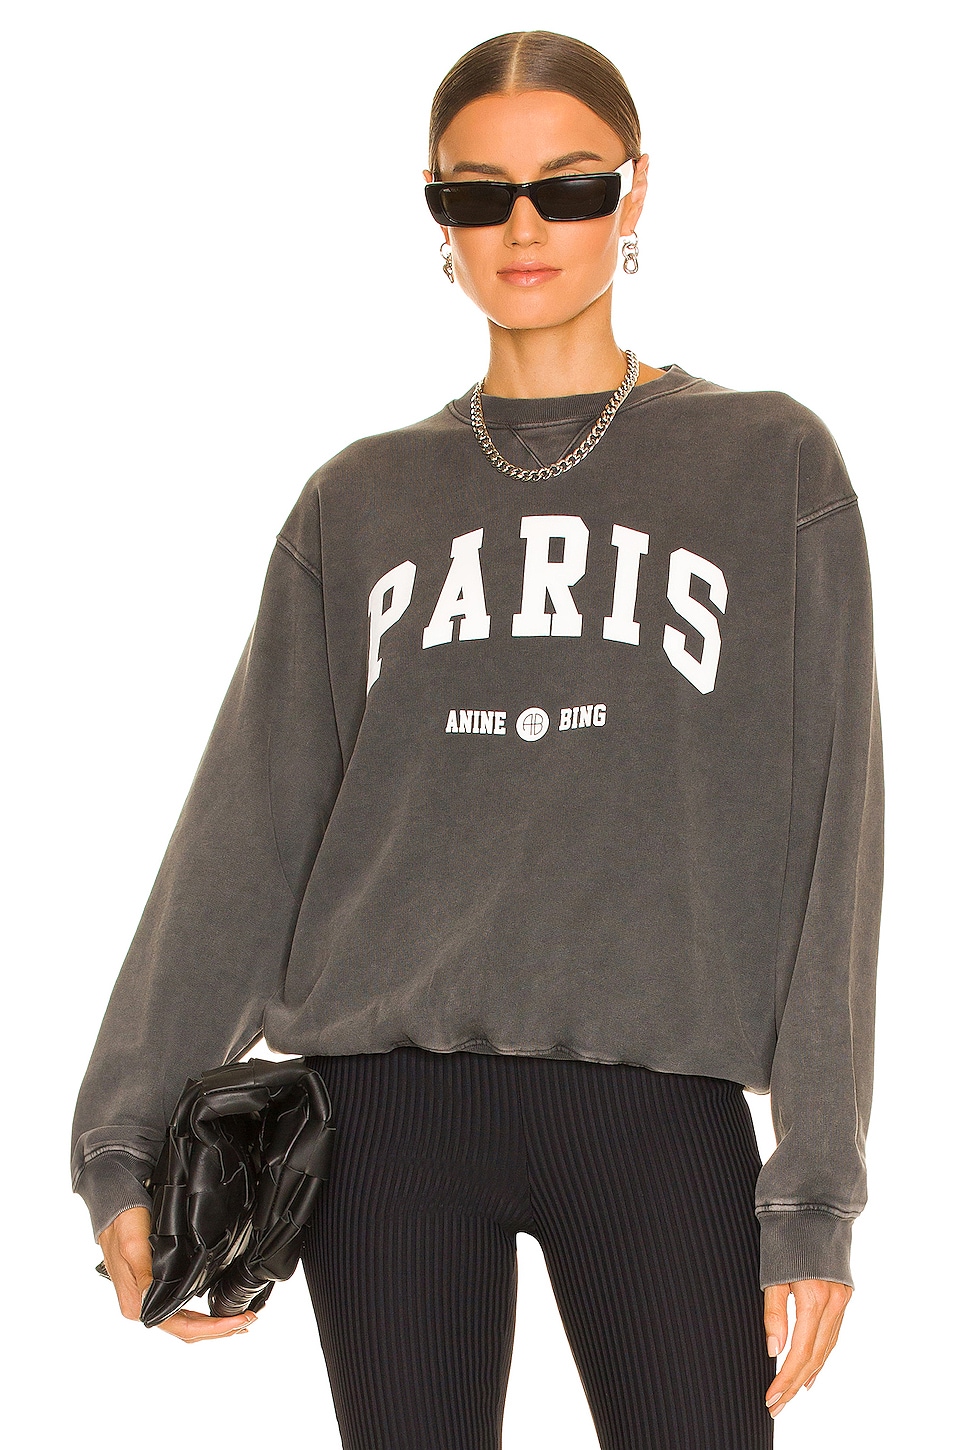 ANINE BING Ramona University Paris Sweatshirt in Washed Black | REVOLVE